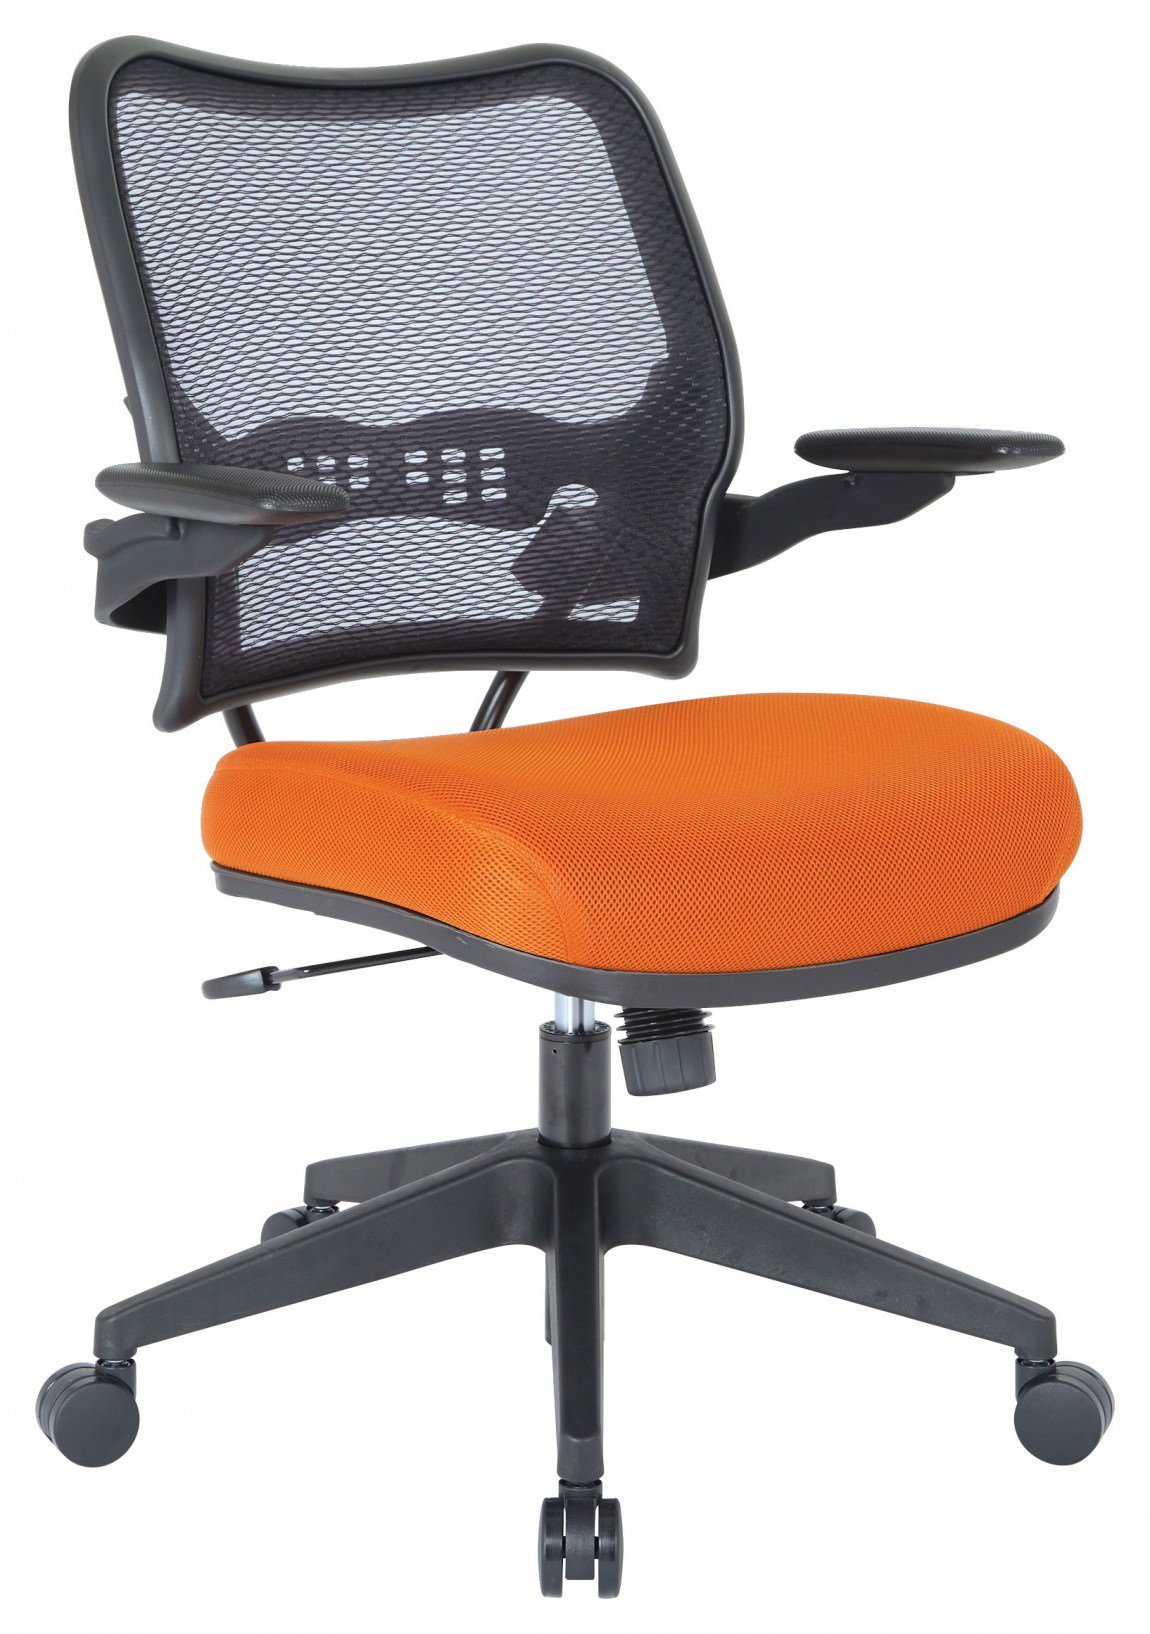 https://madisonliquidators.com/images/p/1150/25117-mesh-back-office-chair-1.jpg